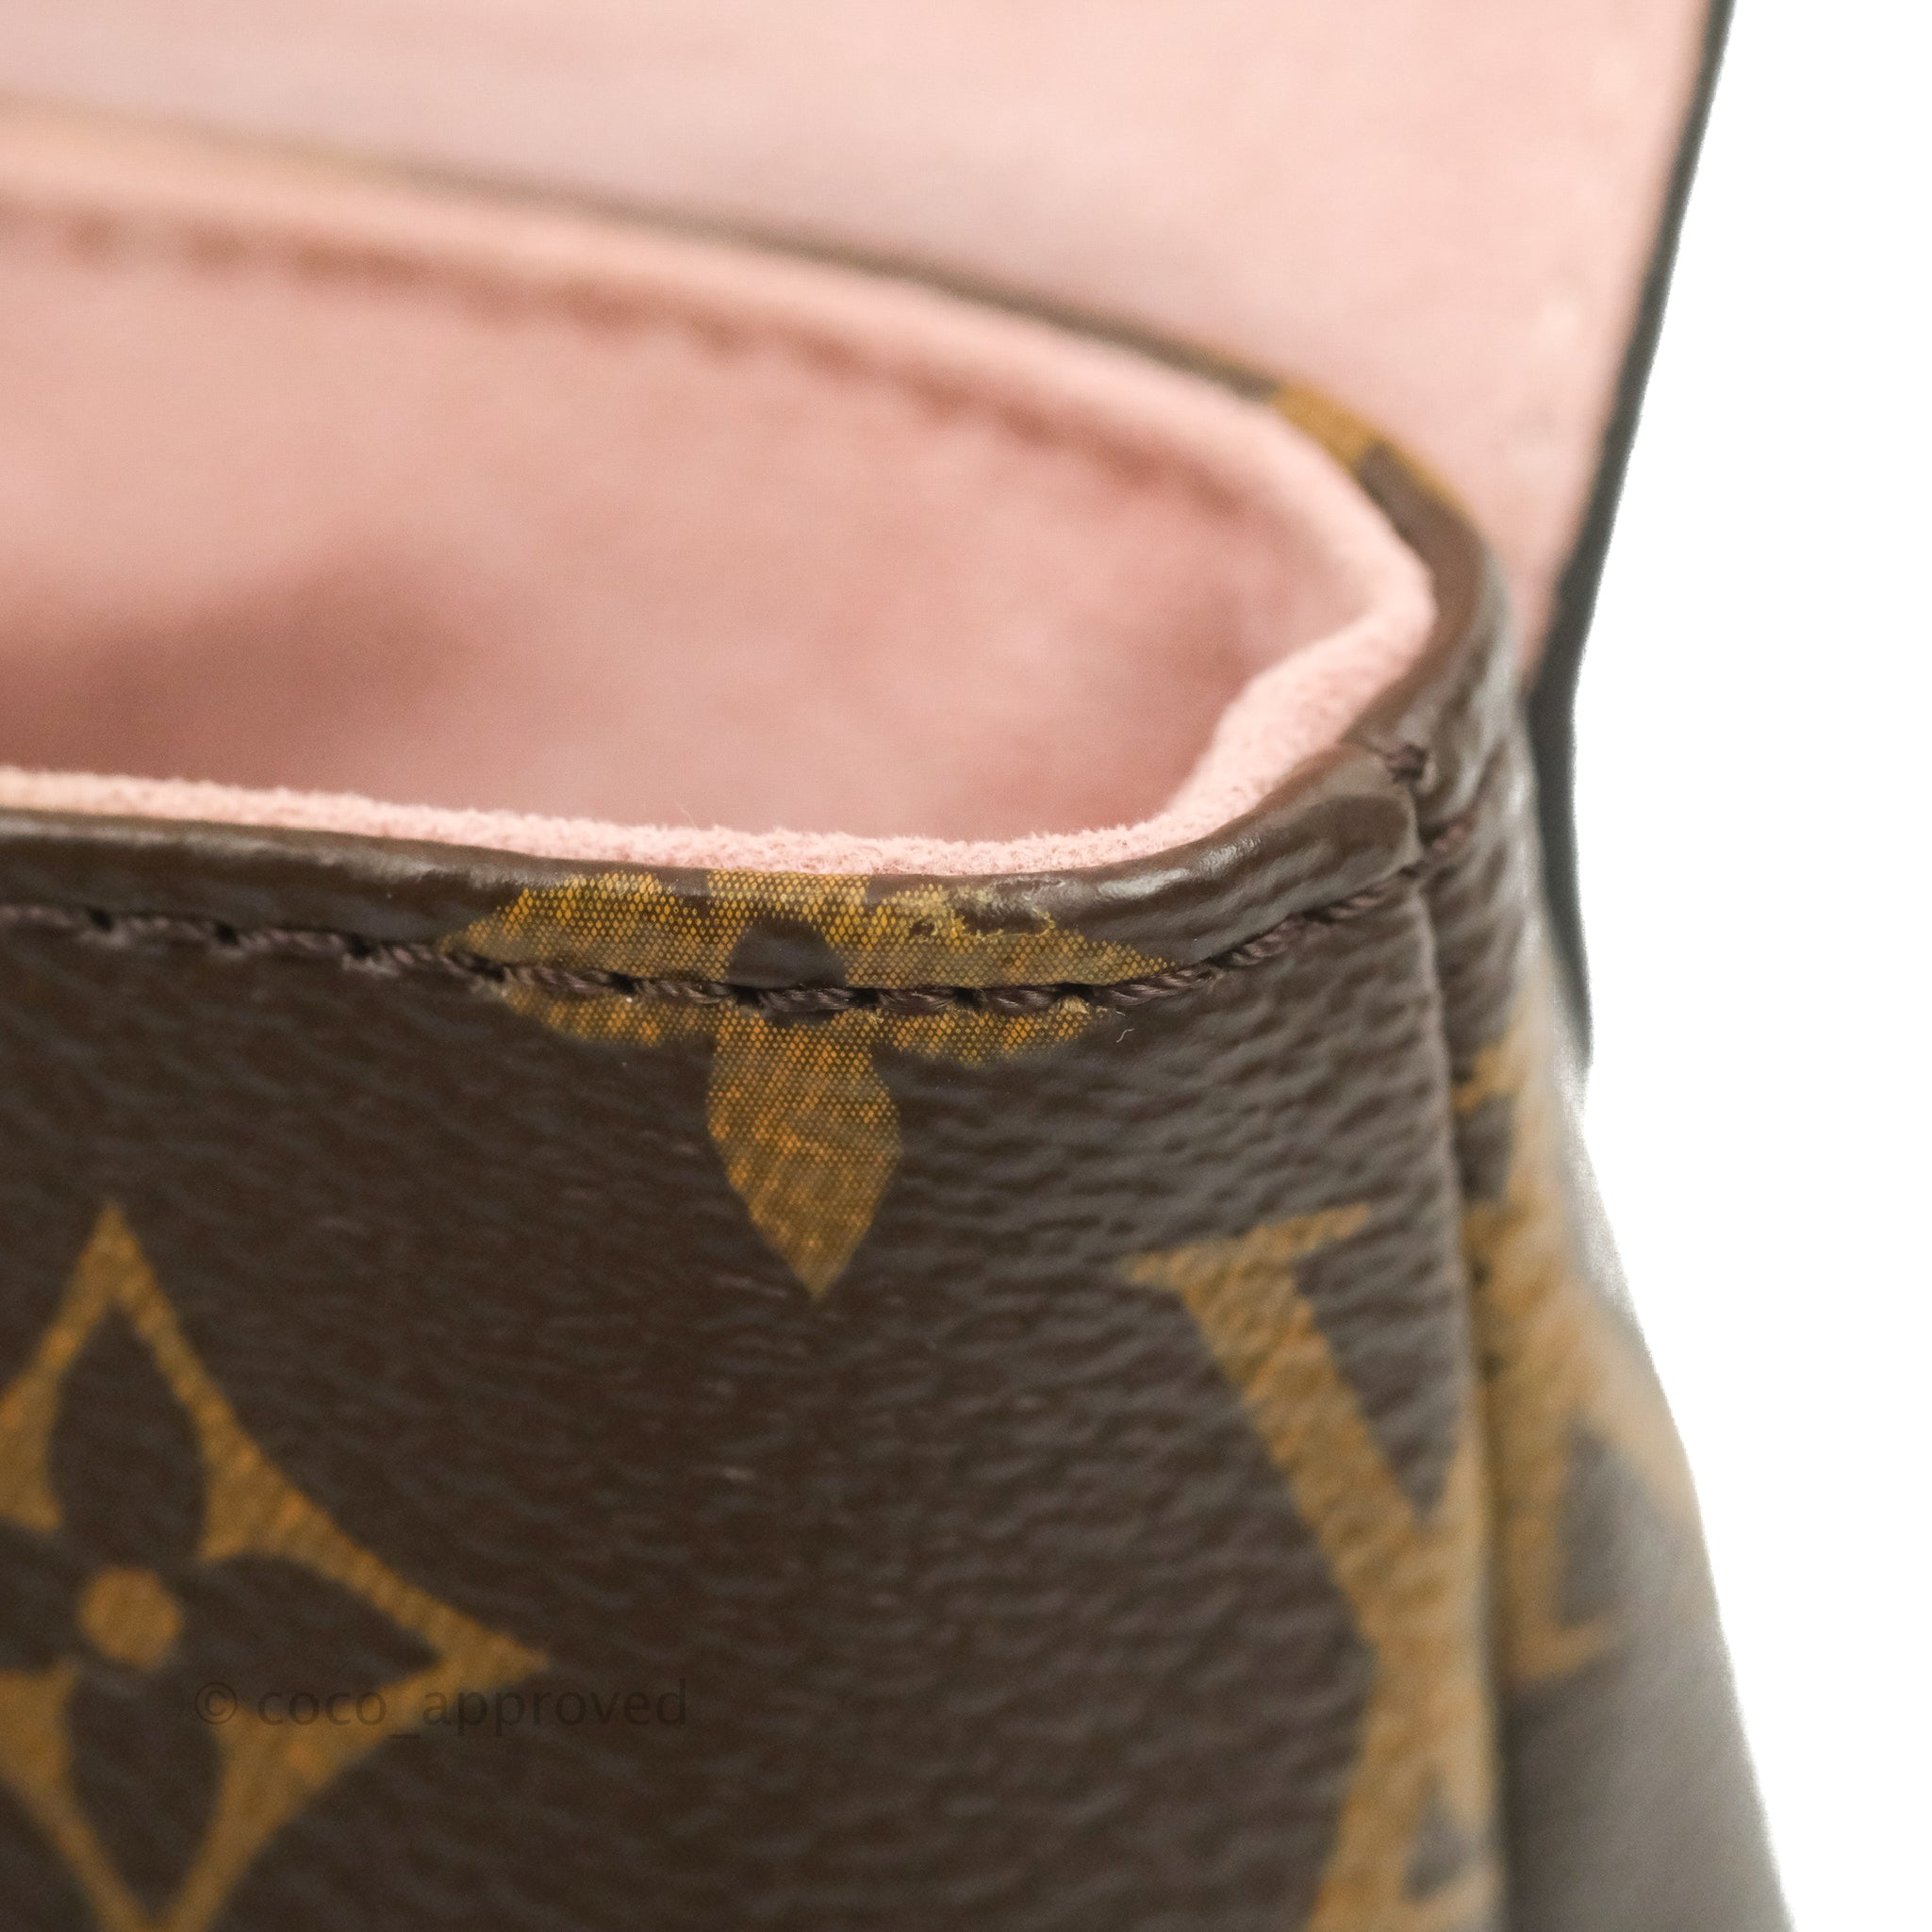 Louis Vuitton NEVERFULL Monogram MM Tote w/ Pink Interior Bag Box &  Pouchette bidding ends 10/17 $1695.00